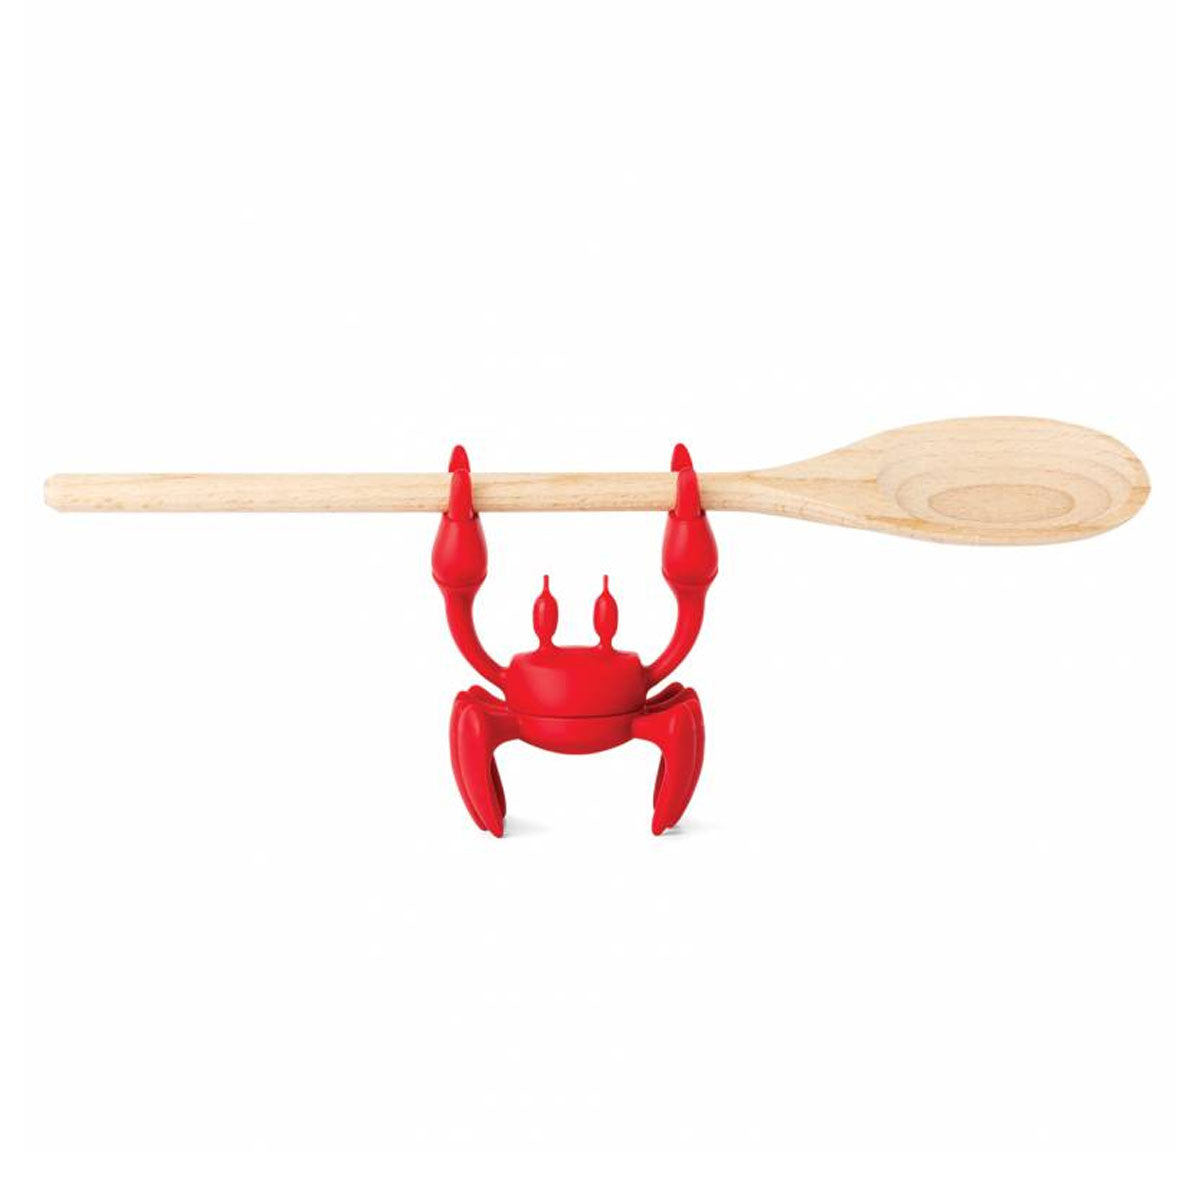 Red The Crab Repose Cuillère Cuisine - Porte Spatule Pour